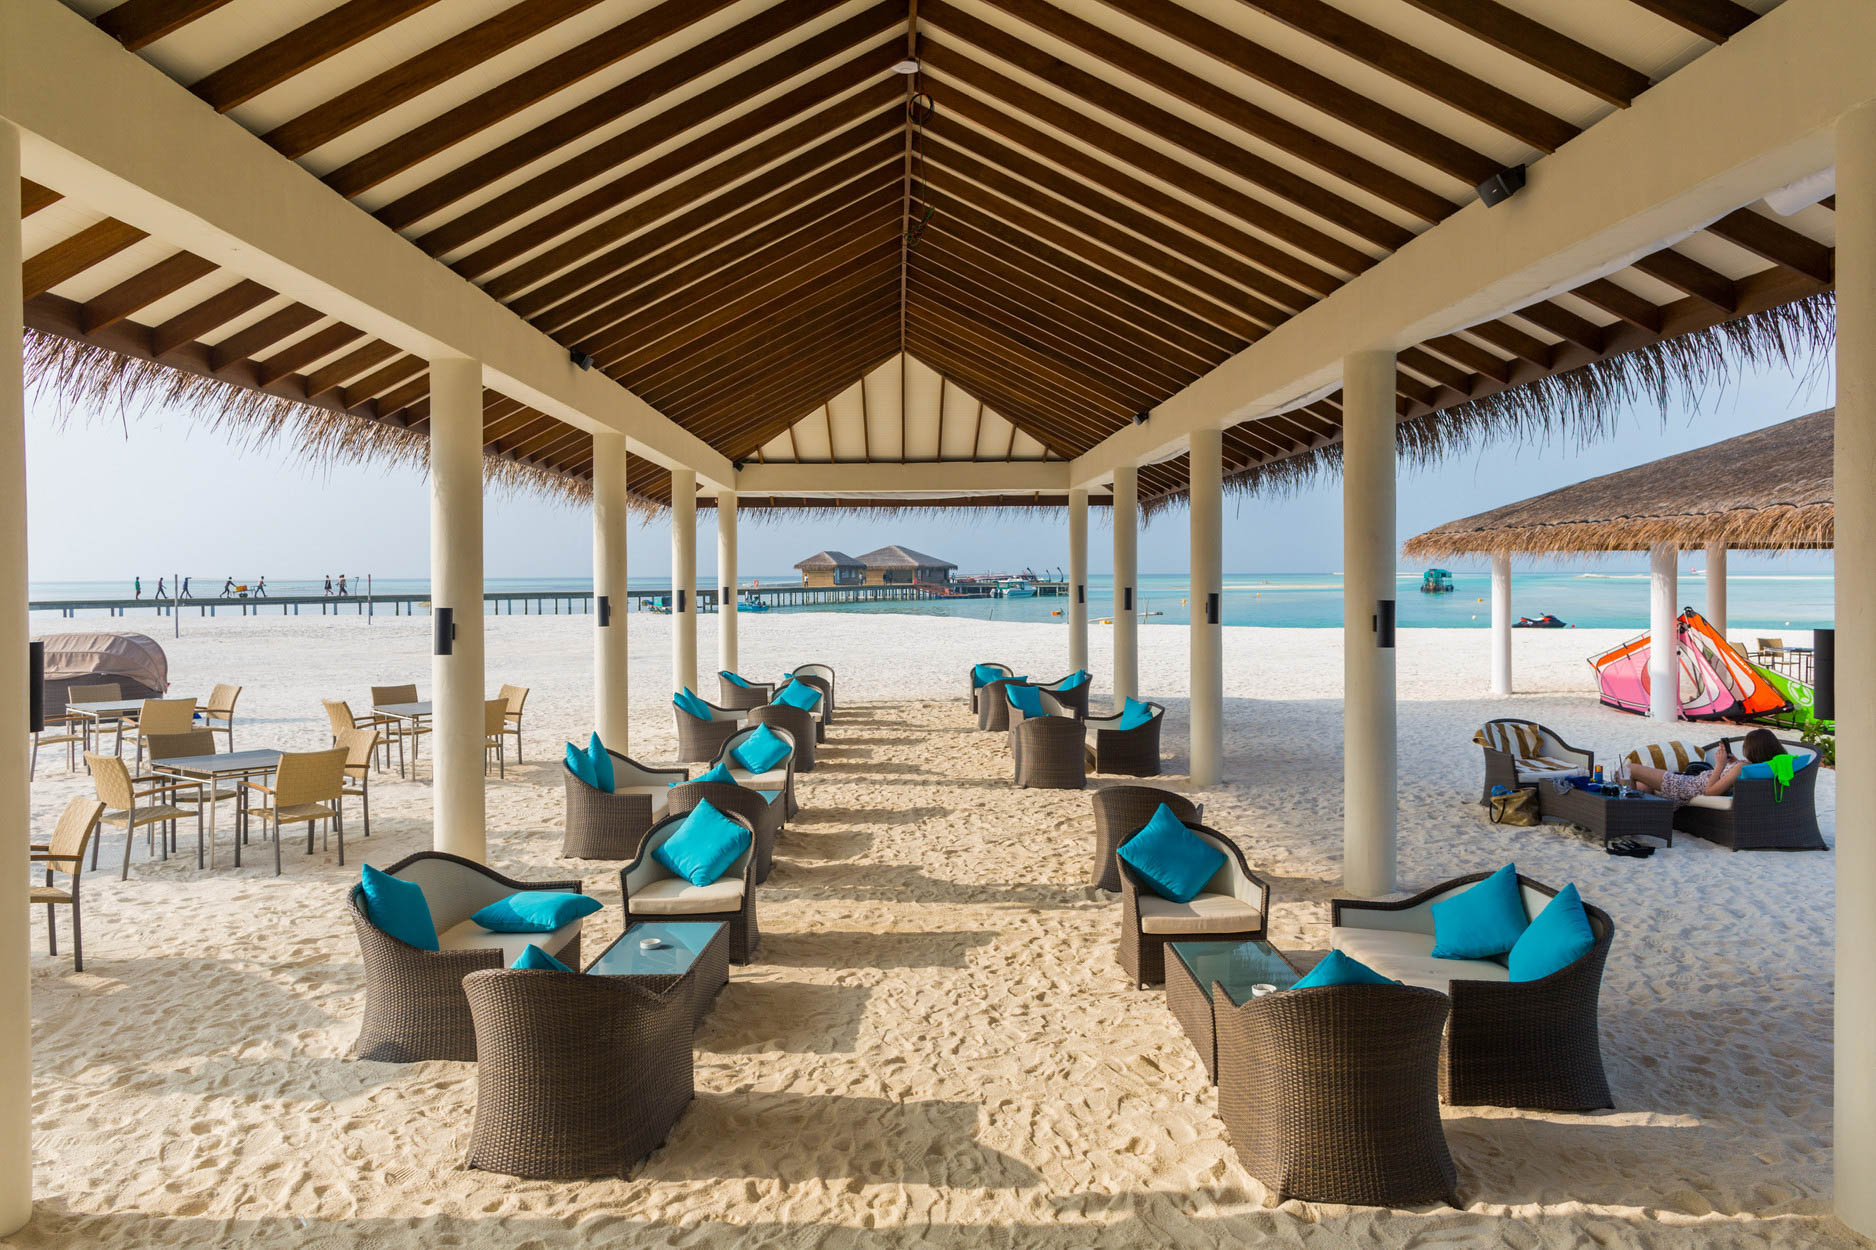 Cocoon Maldives Resort – Ookolhufinolhu, Lhaviyani Atoll, Maldives – Loabo Loabi Bar